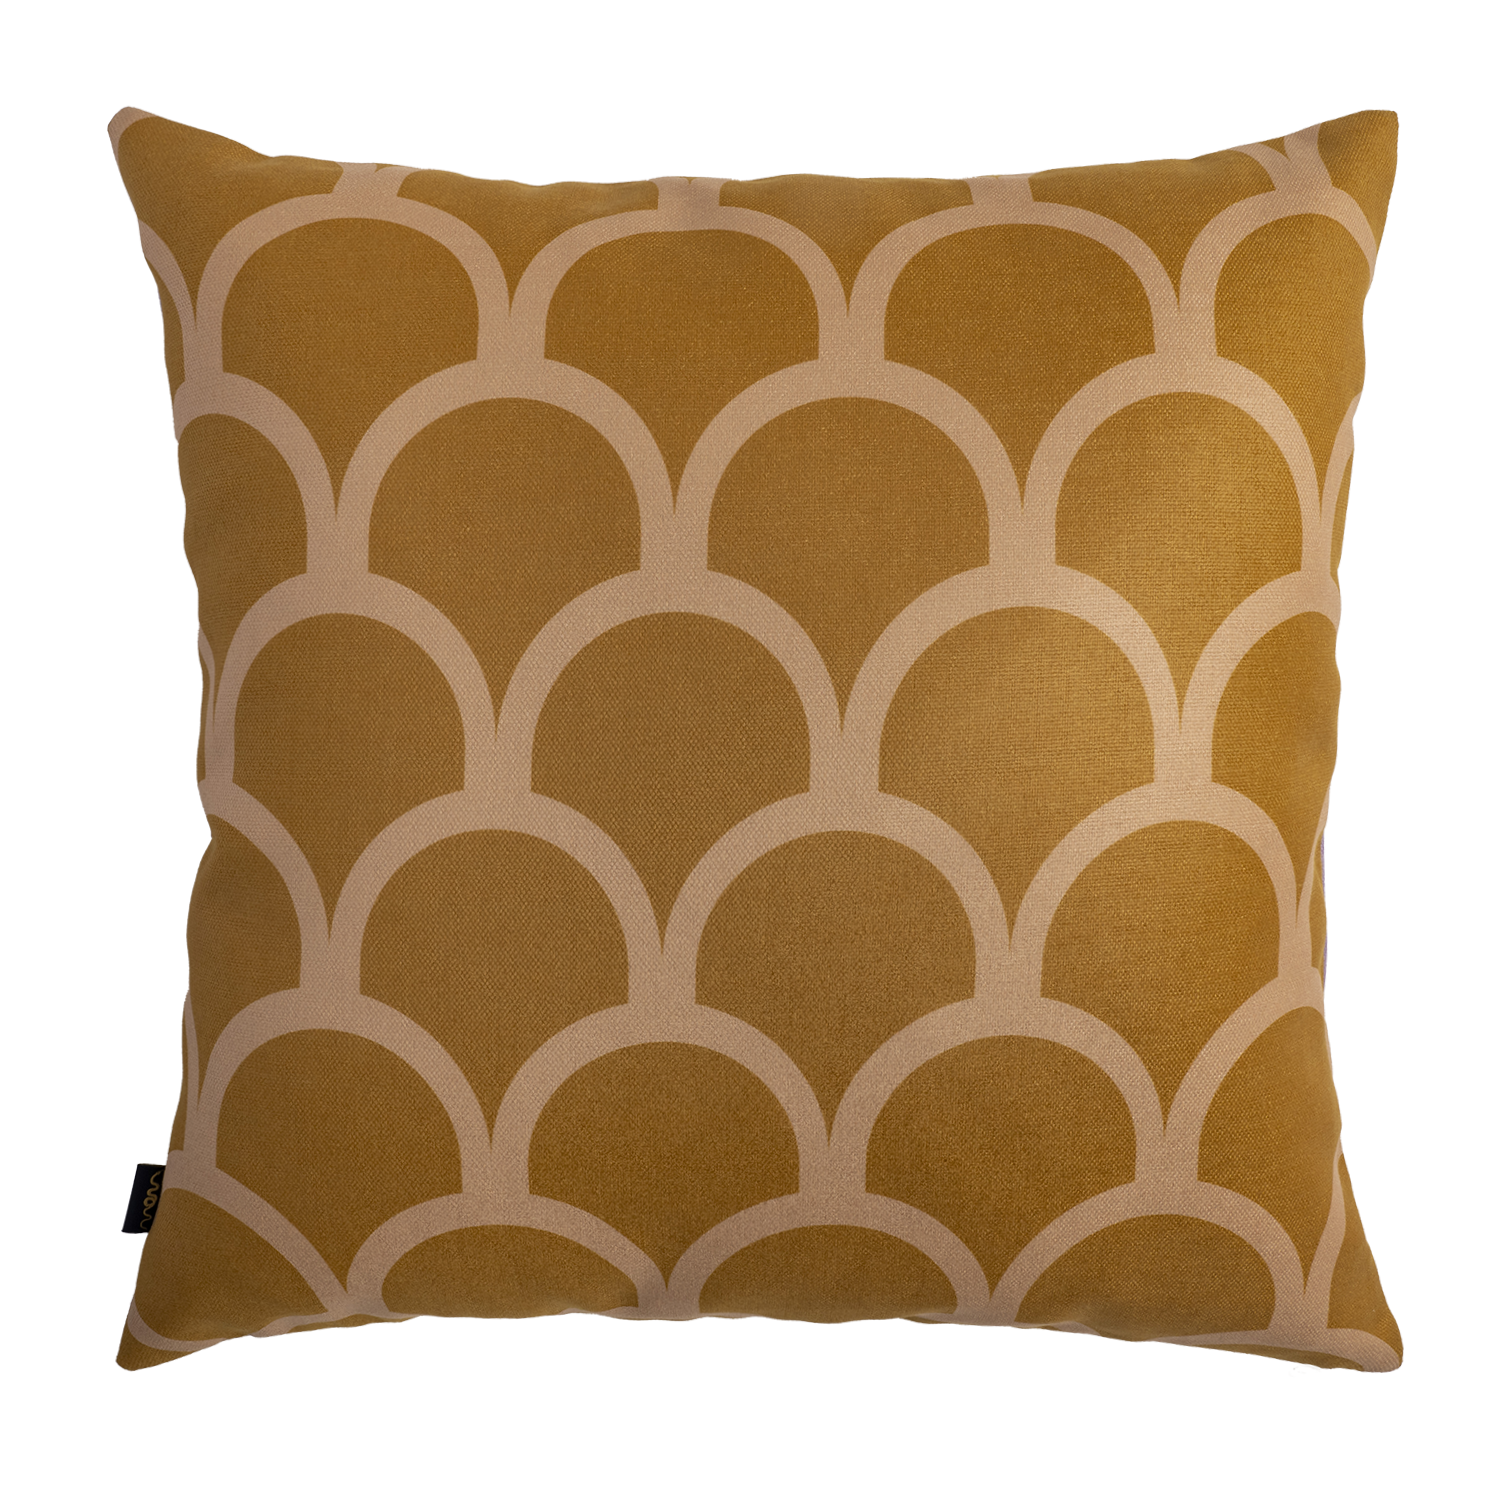 Amarello Fish - Canvas Pillow